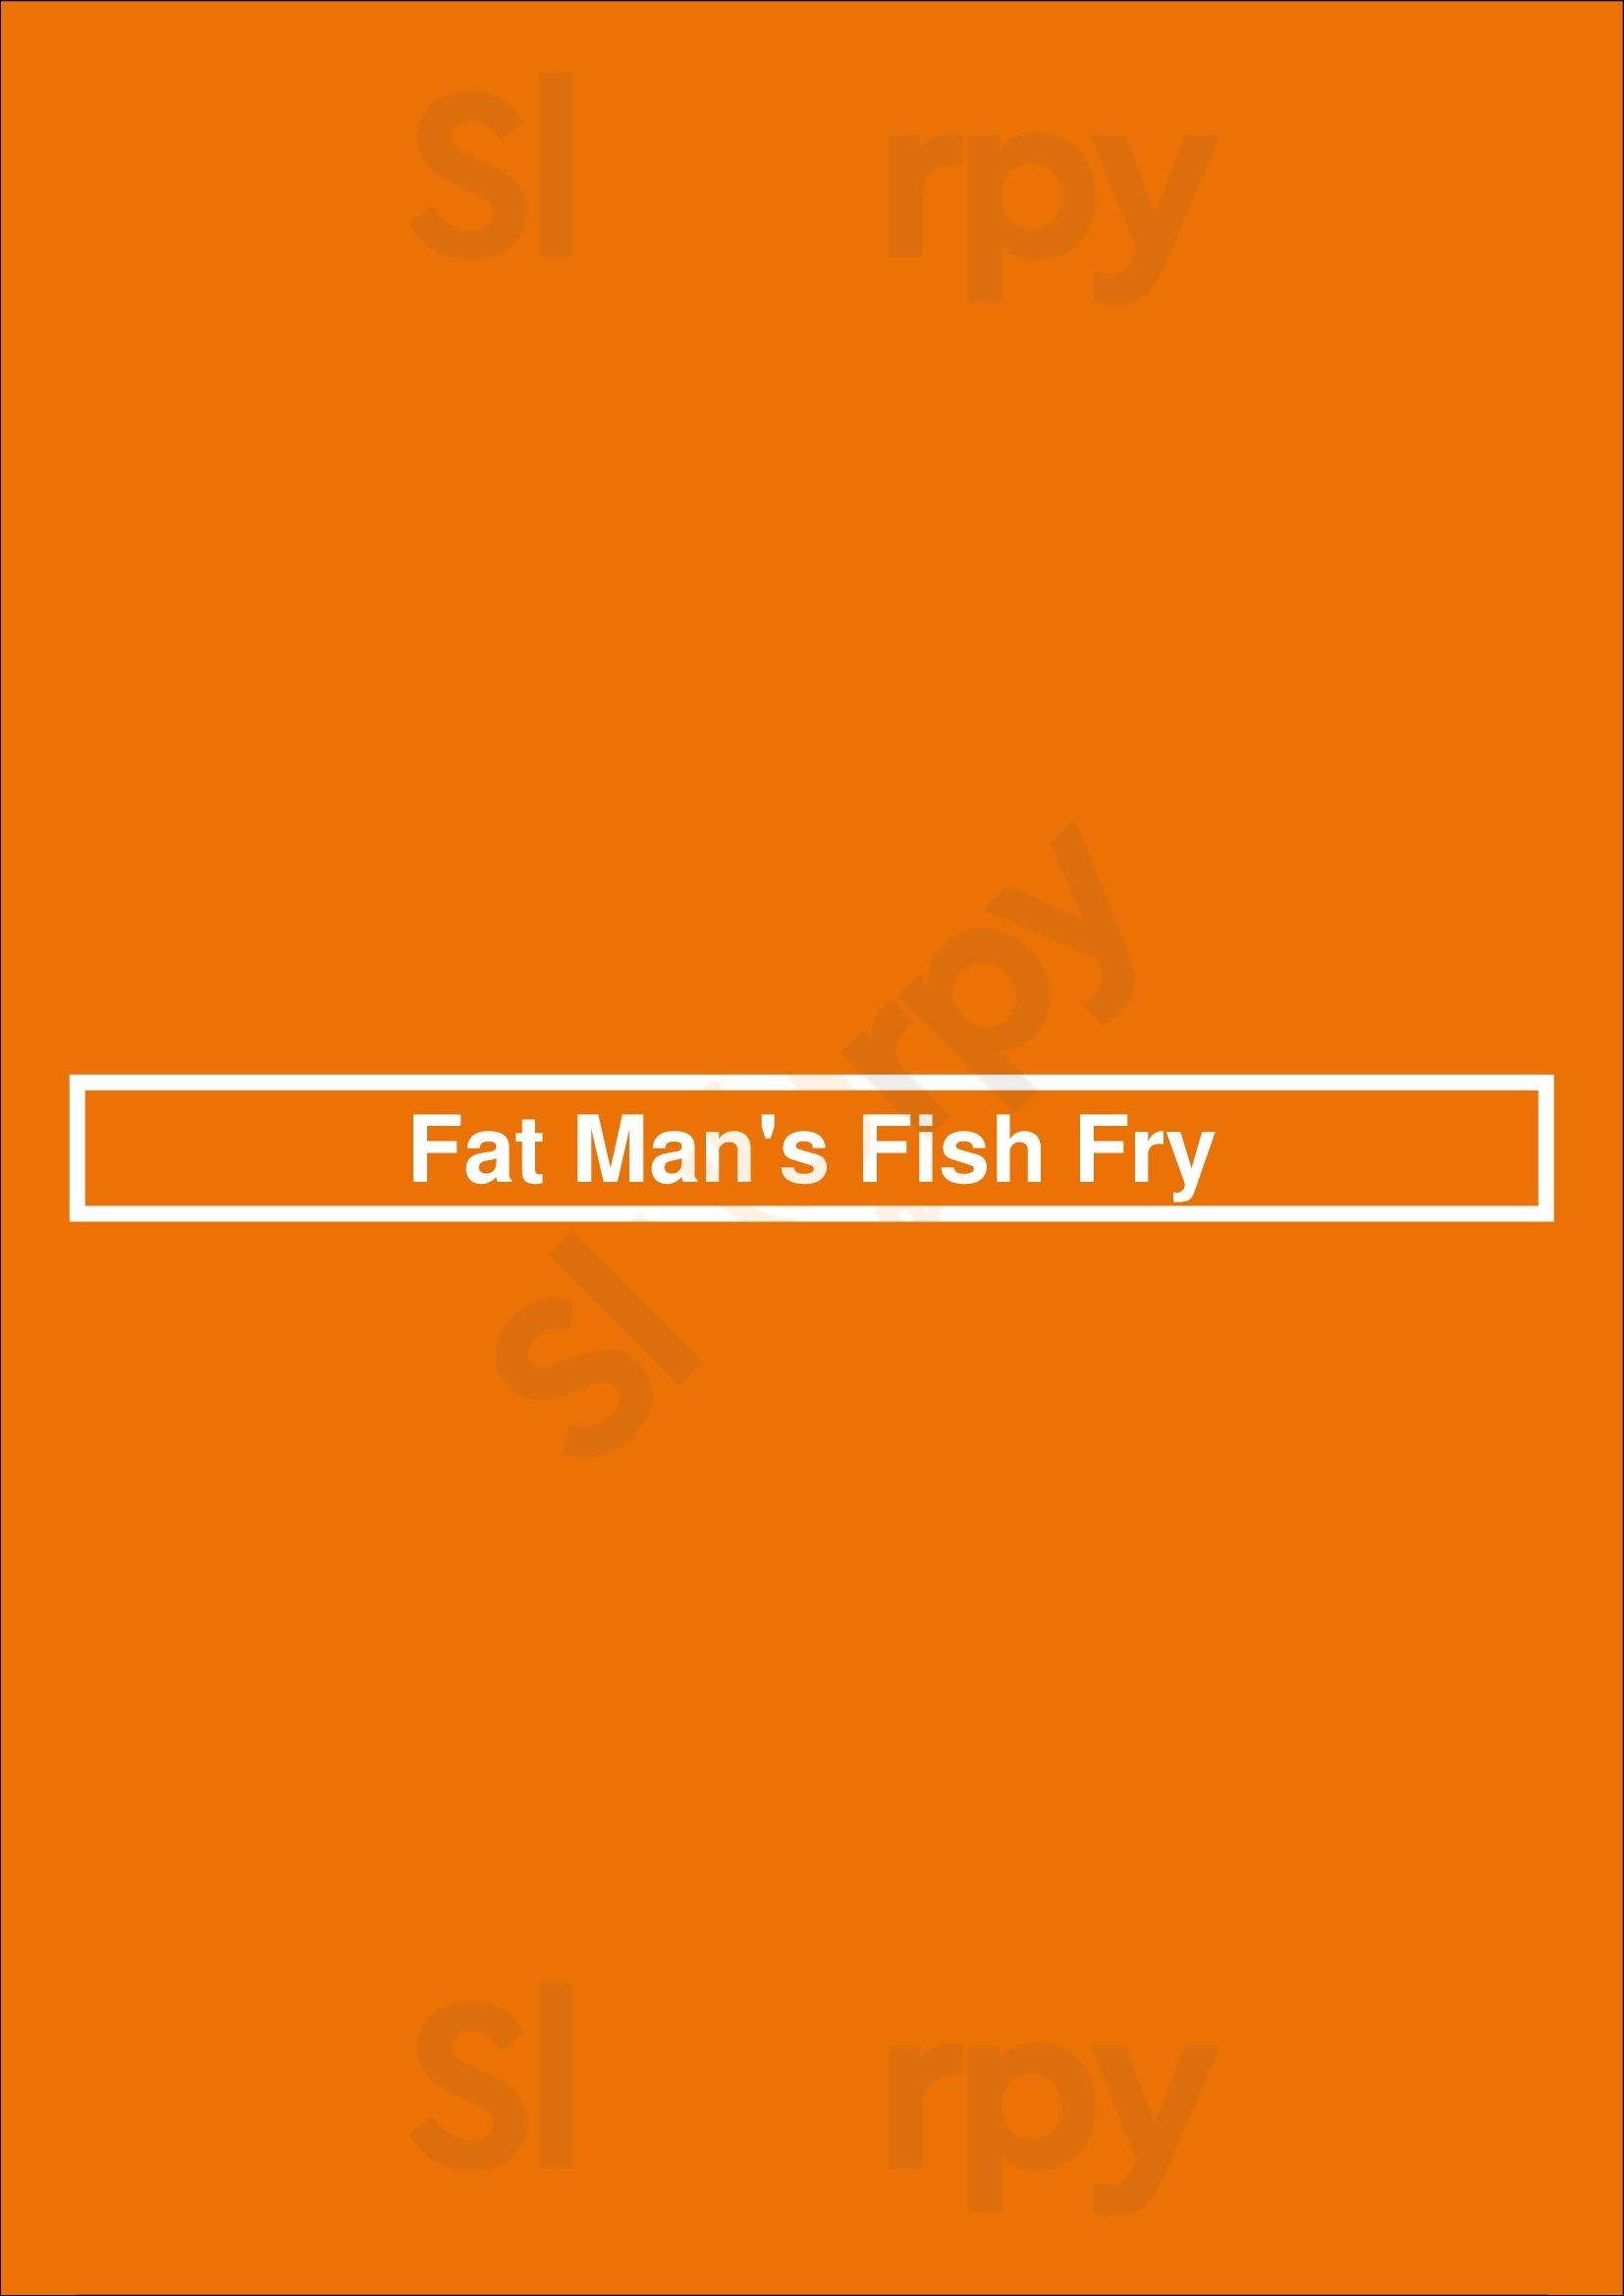 Fat Man's Fish Fry Grand Rapids Menu - 1